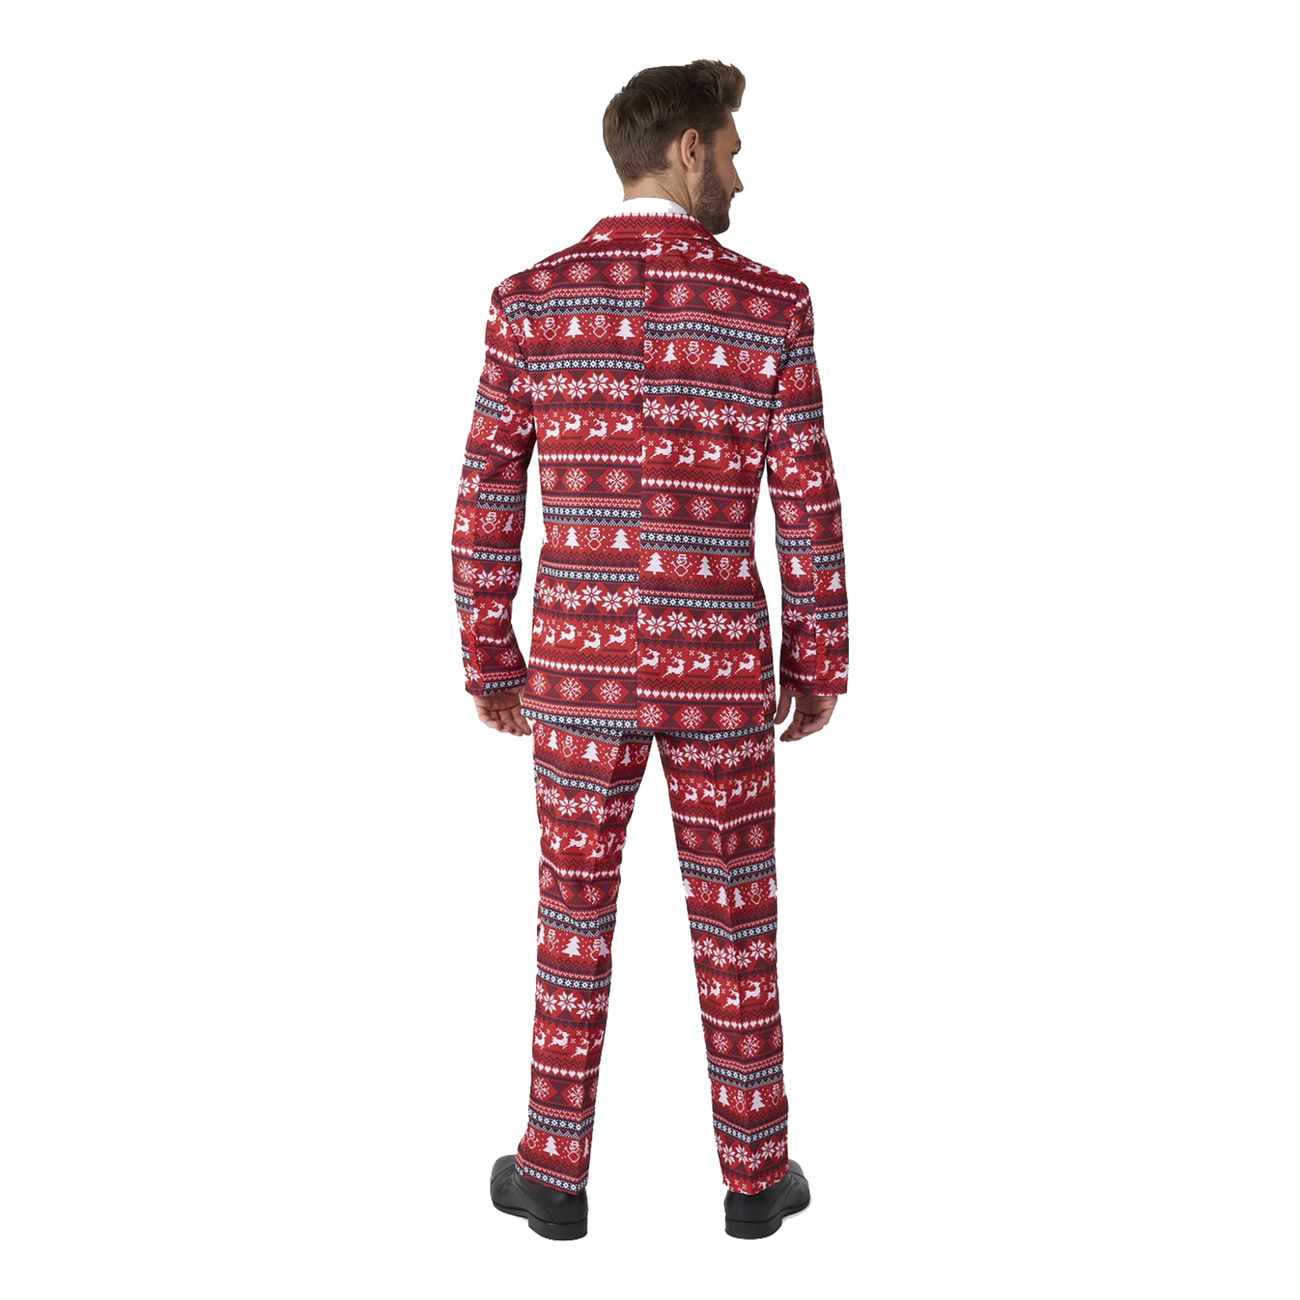 suitmeister-nordic-pixel-rod-kostym-89986-2